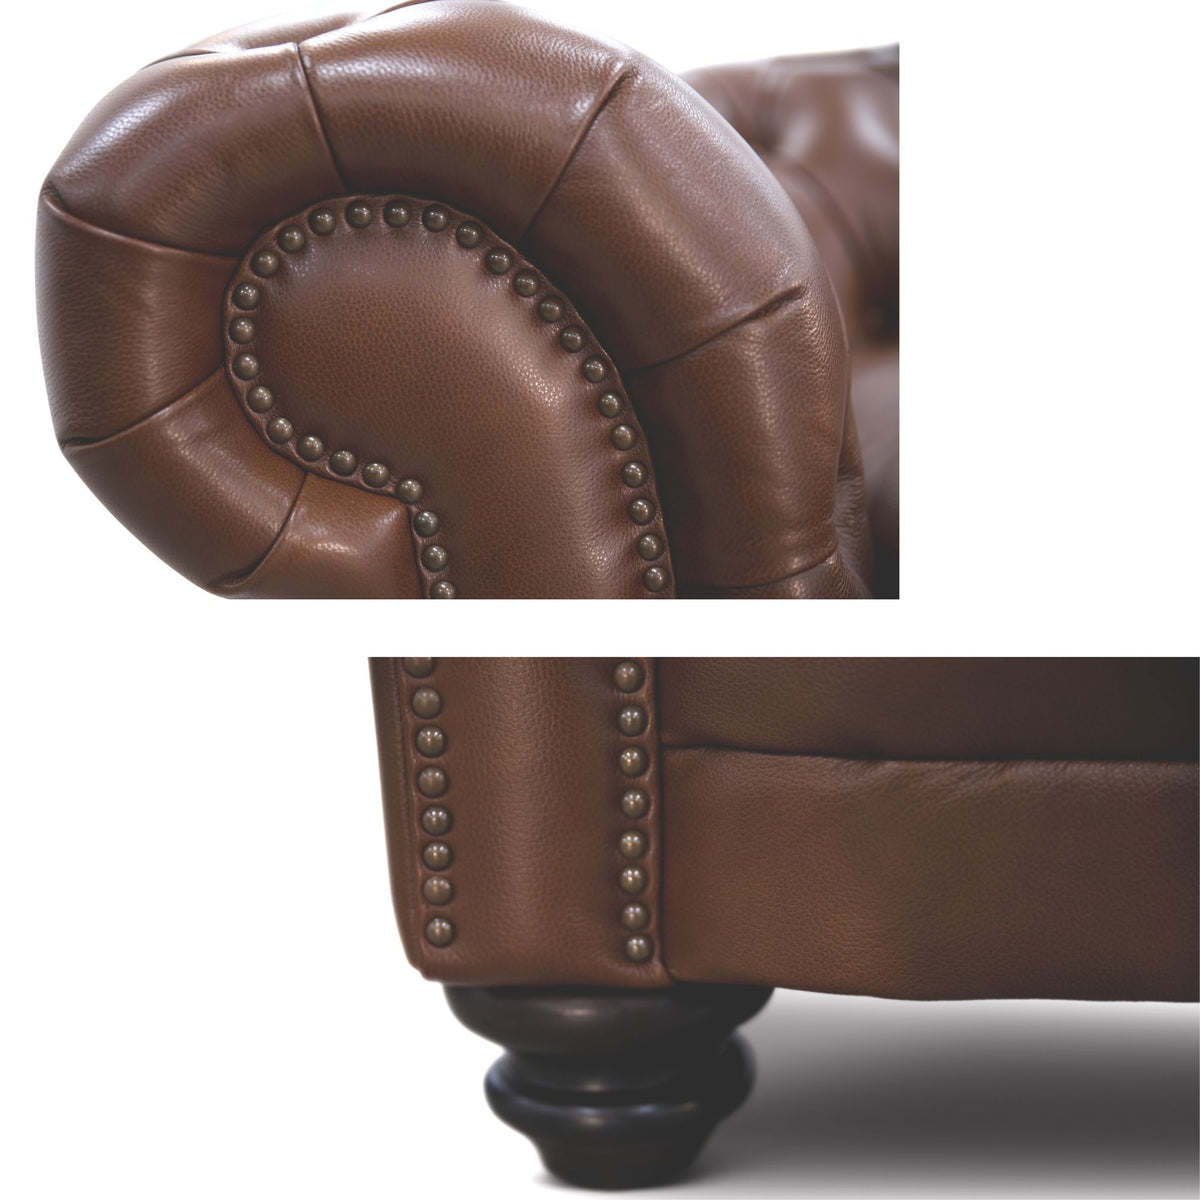 Desire Chestfield Genuine Leather 3 + 1 Seater Sofa - Butterscotch - Notbrand